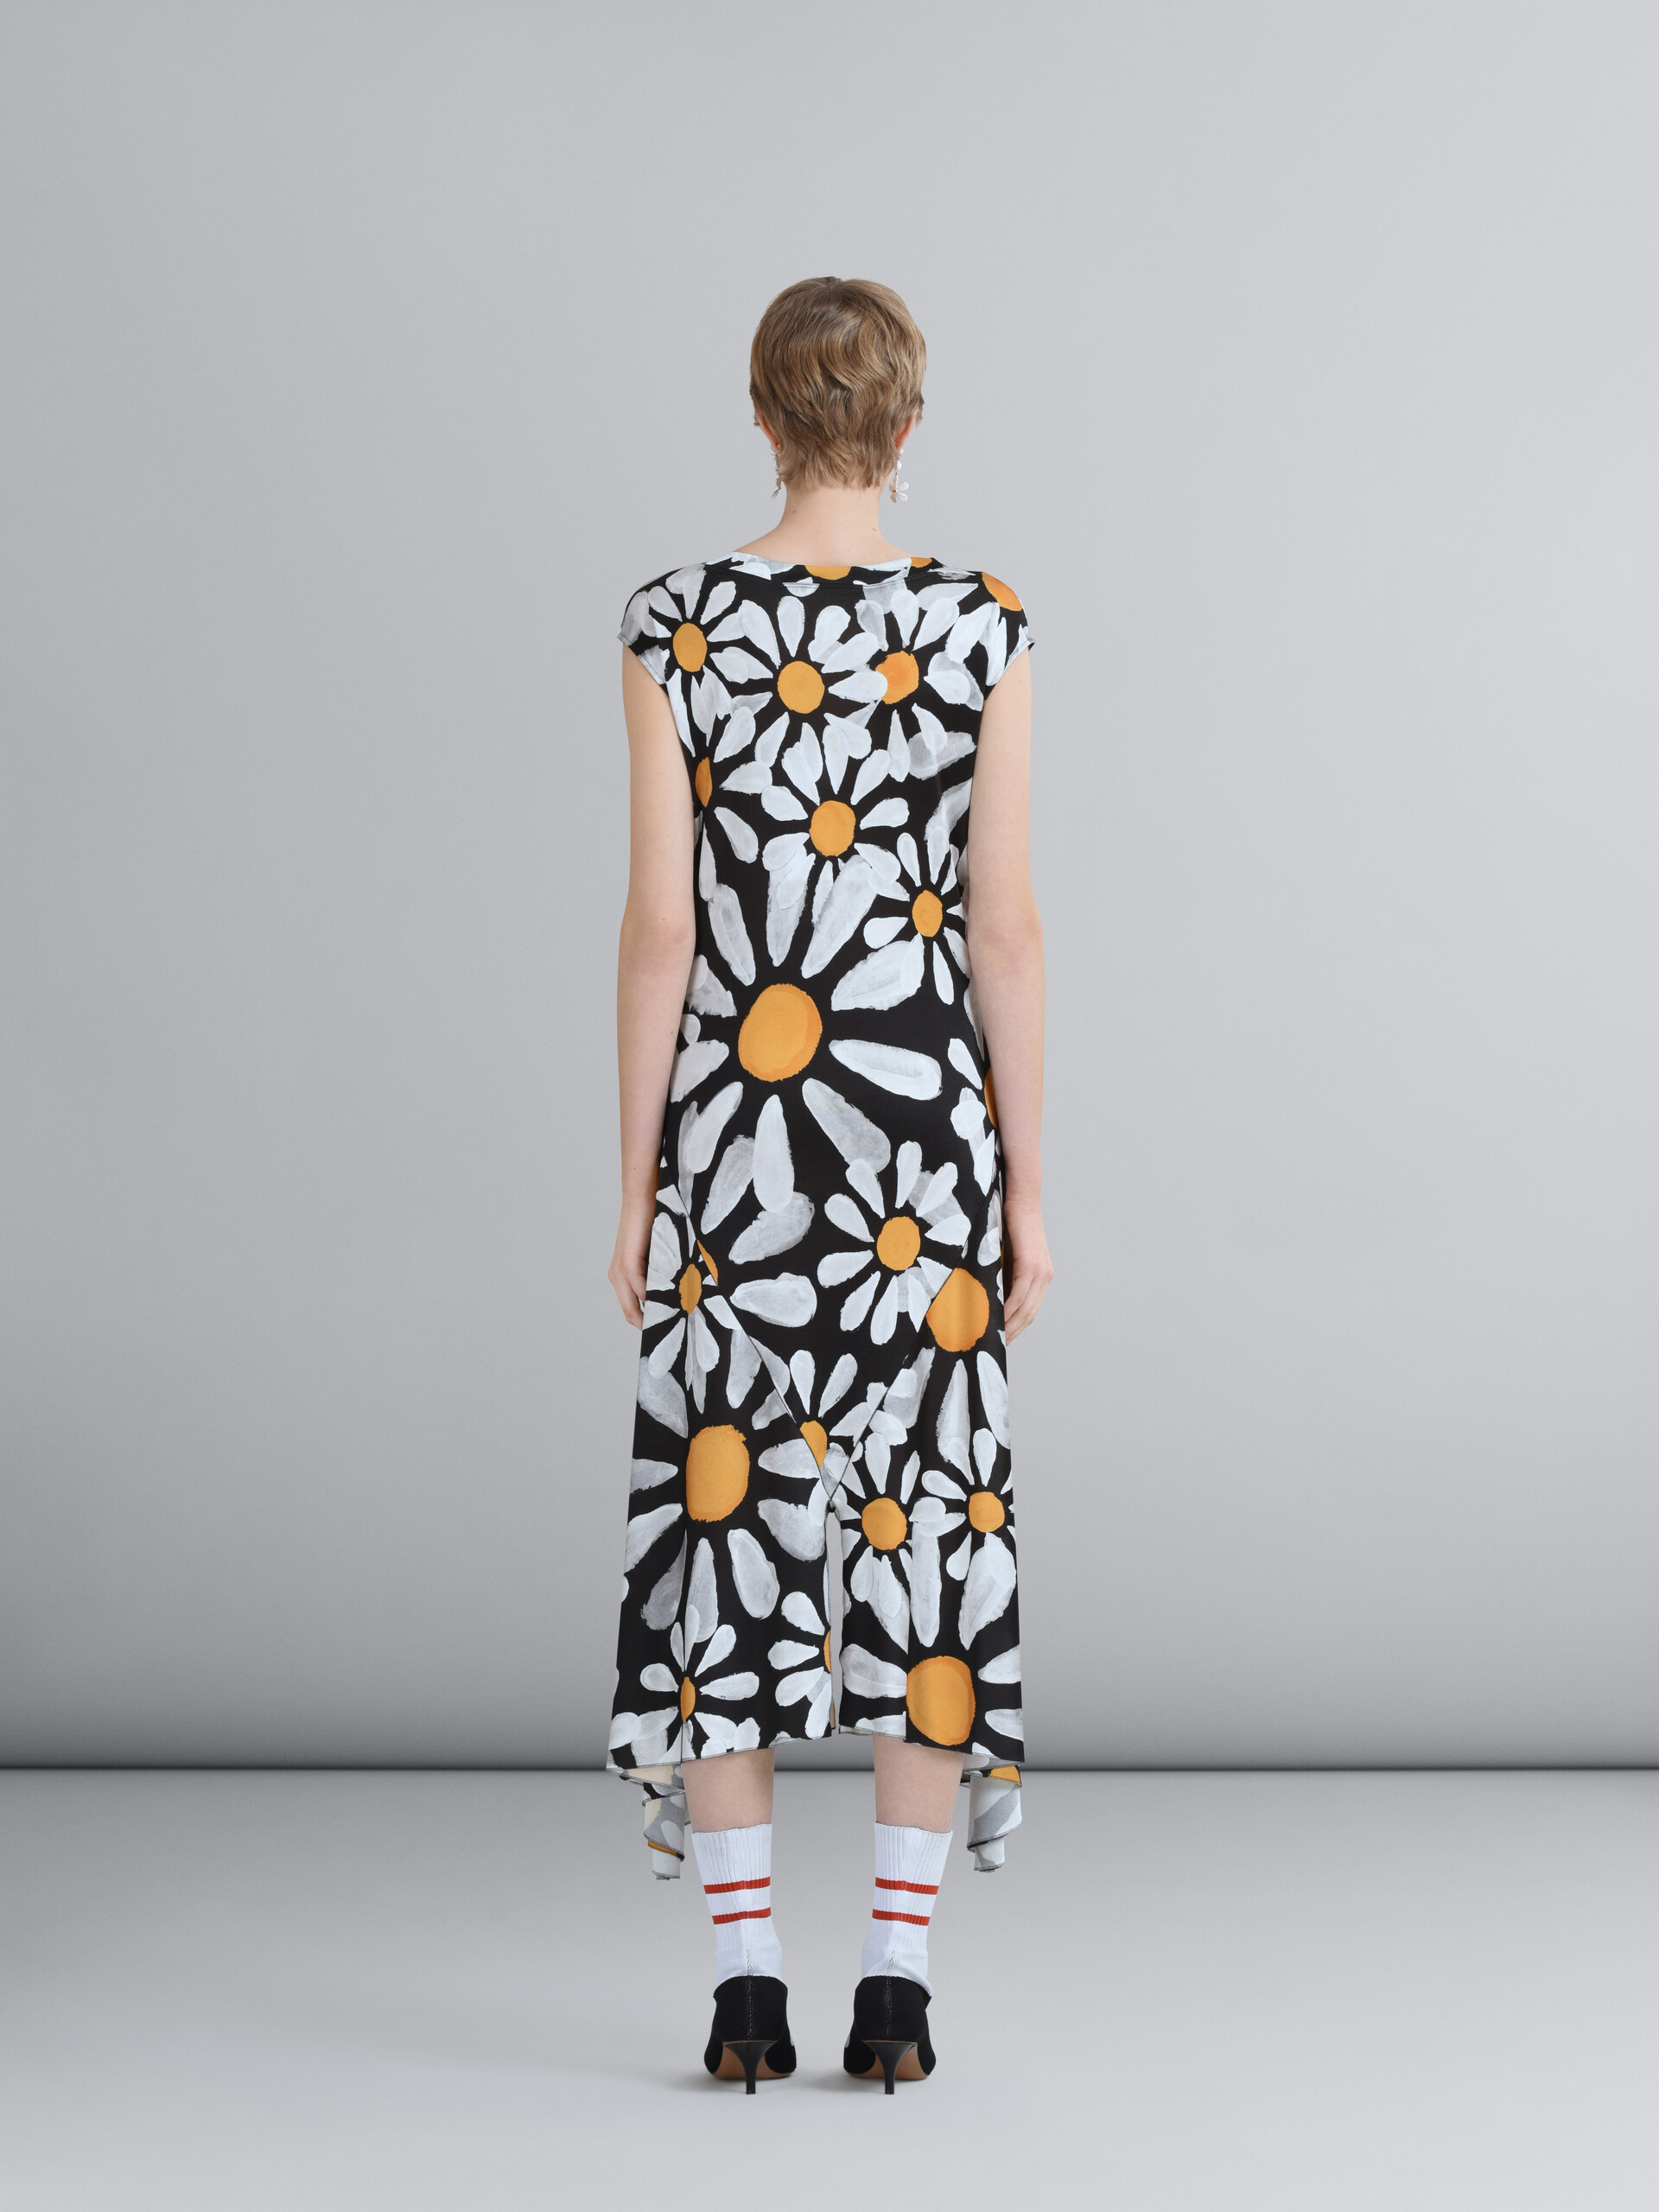 Euphoriaプリント ビスコースジャージー製ドレス - ドレス - Image 3